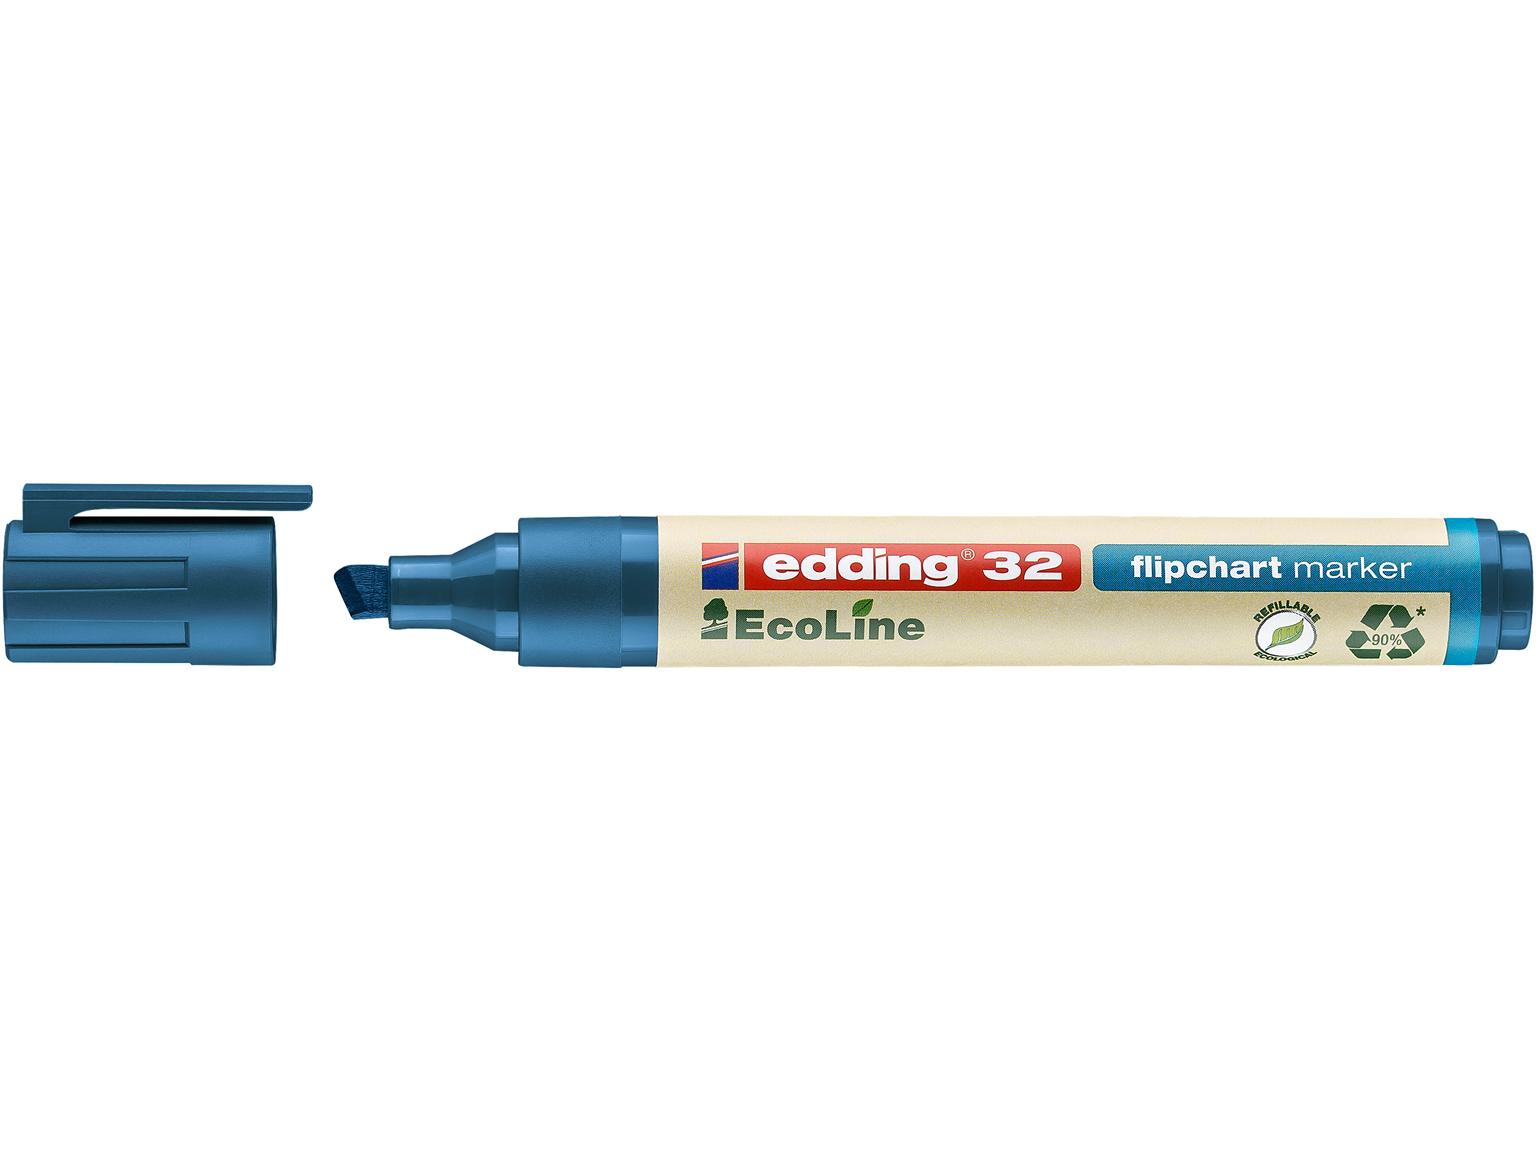 FLIPCHARTMARKER EDDING  edding Flipchartmarker 32 EcoLine blau